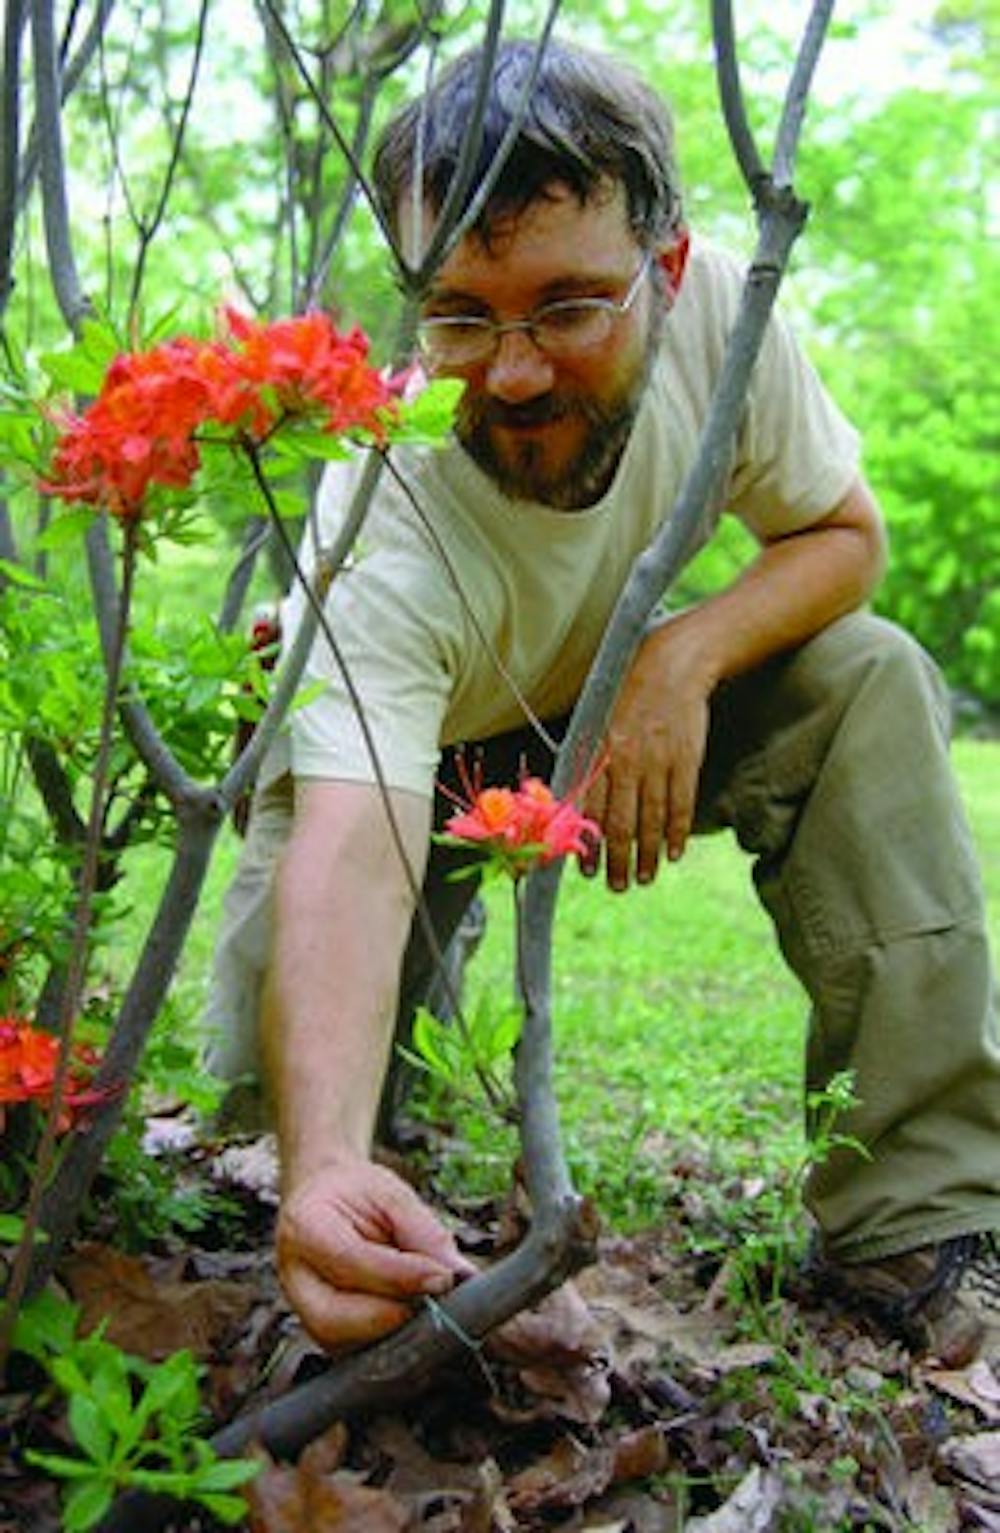 Patrick Thompson, specialist at the arboretum, checks a plant label on an azalea. (Rebekah Weaver / ASSISTANT PHOTO EDITOR)